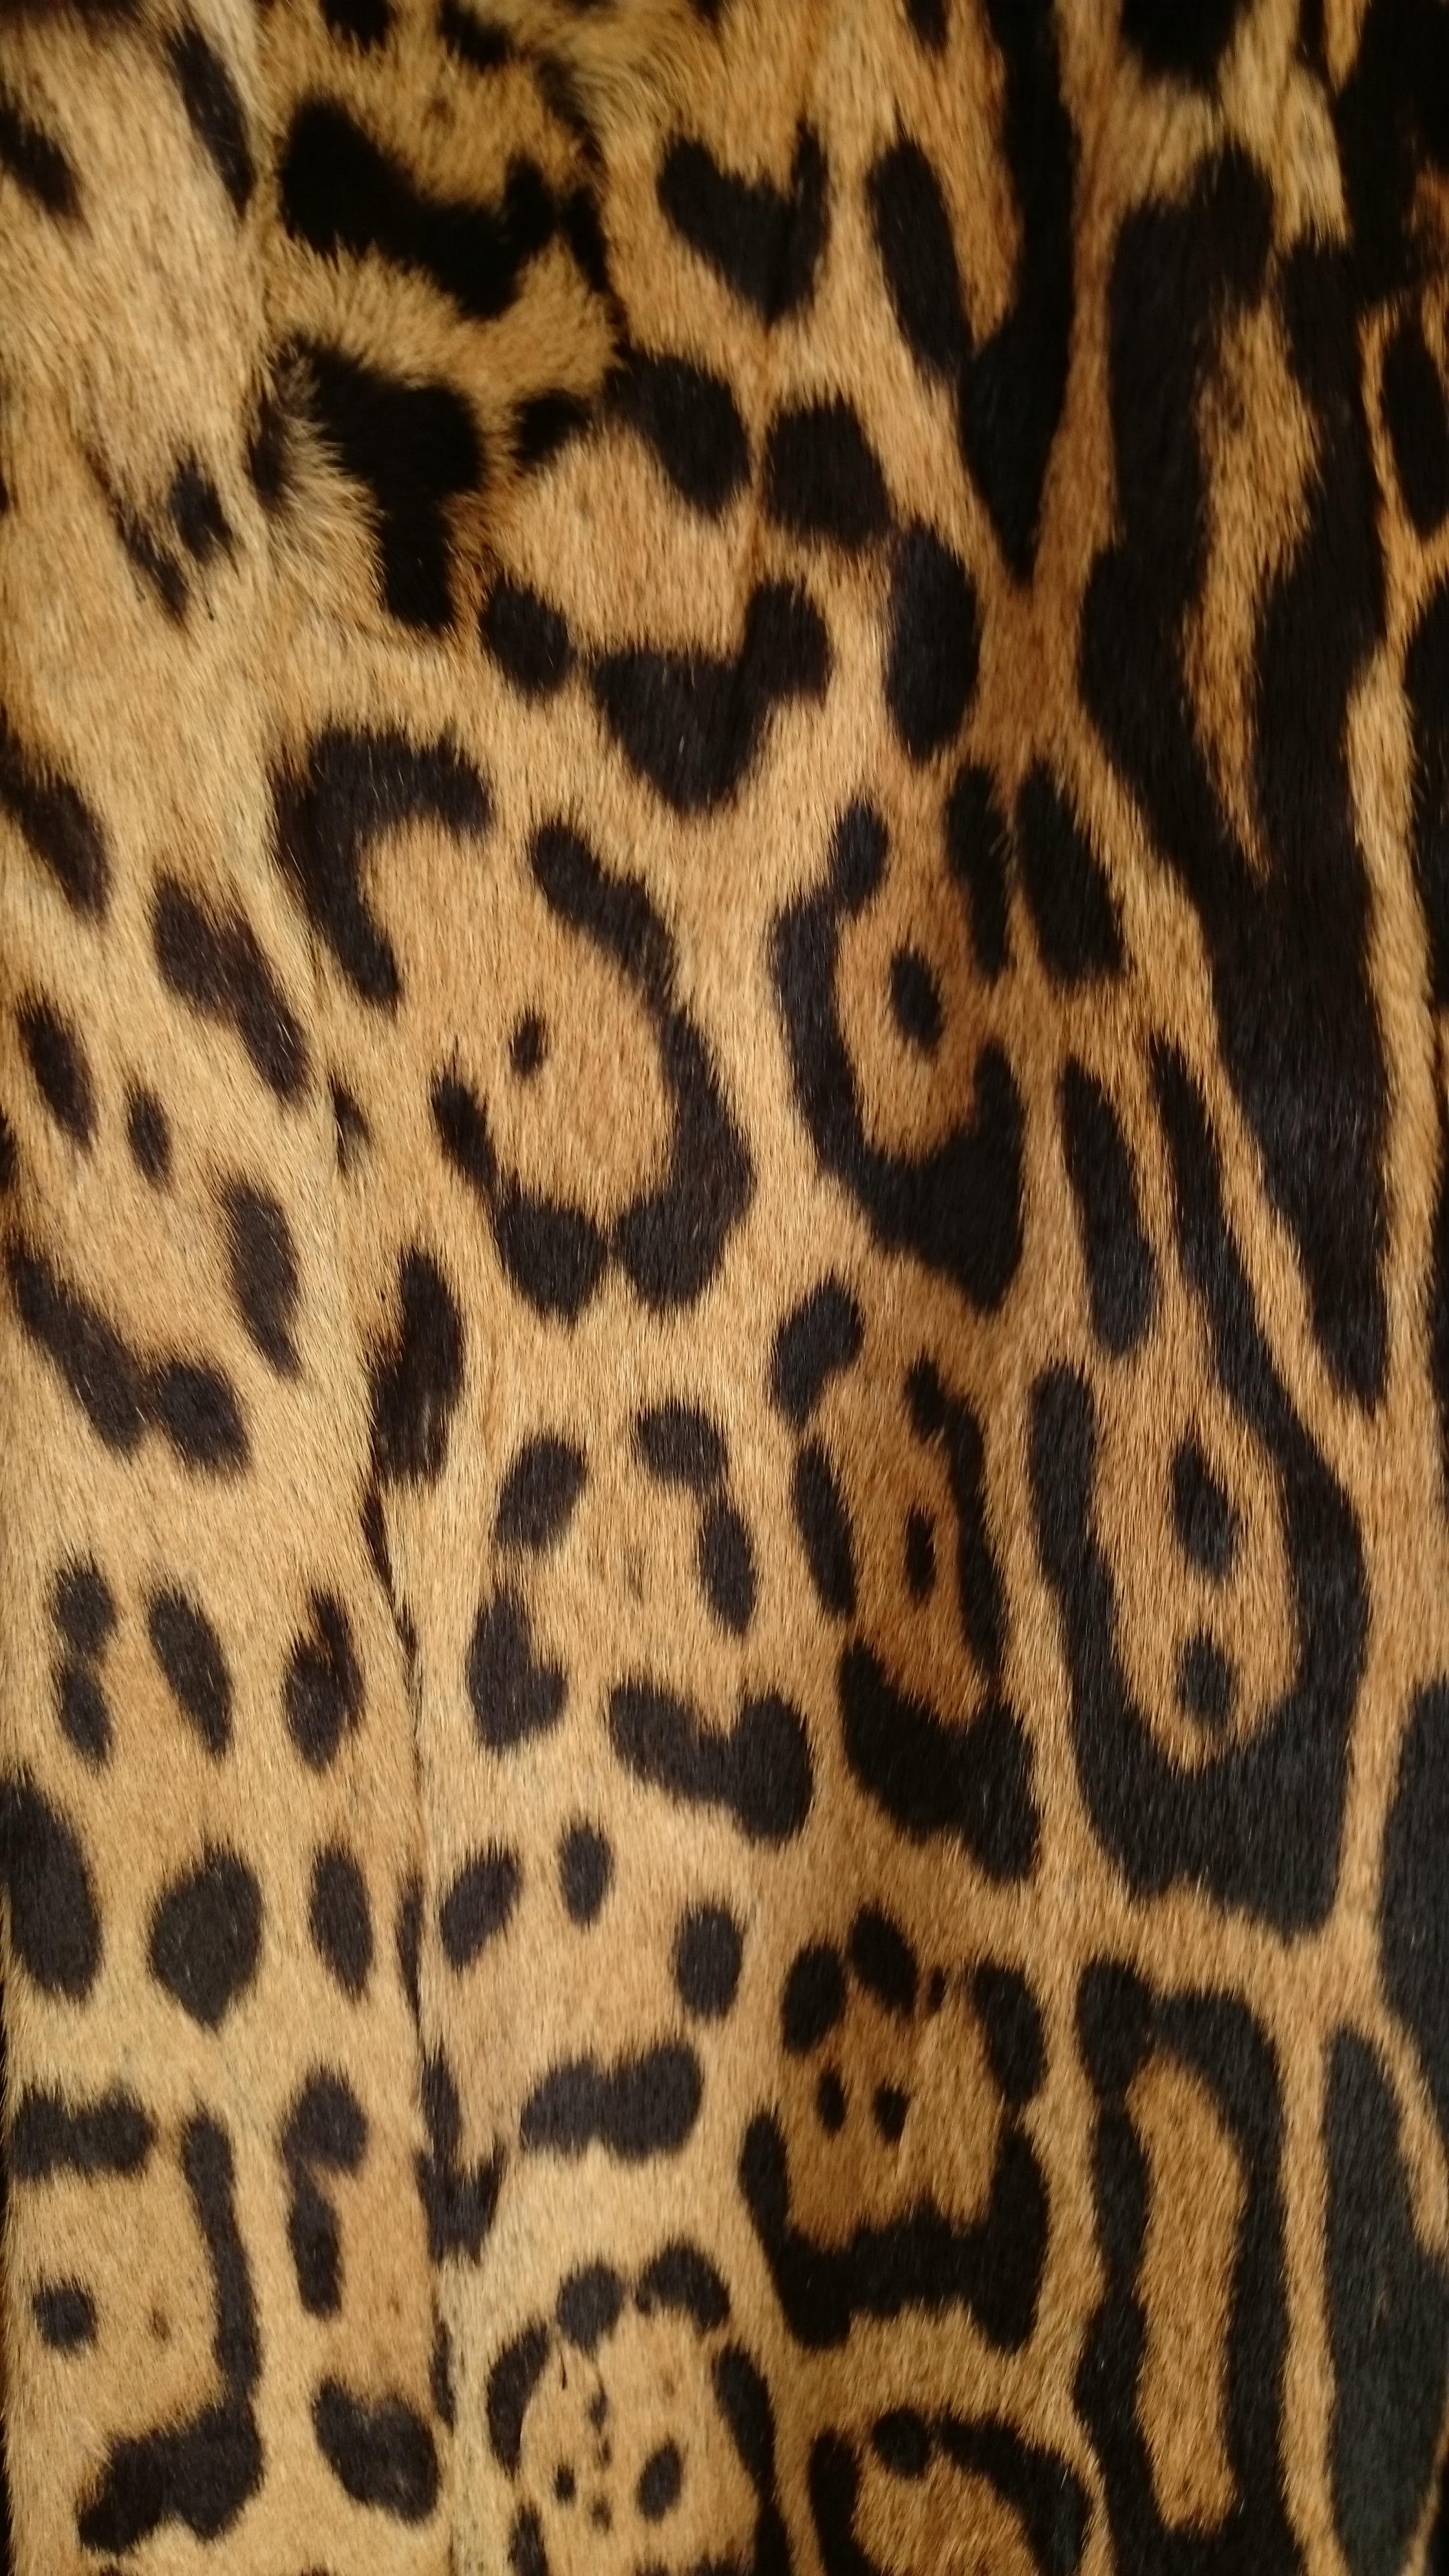 Haute Couture MANFRIANI Florence Rare Wild Jaguar Fur (Pre-Ban) Coat. Unworn  For Sale 2